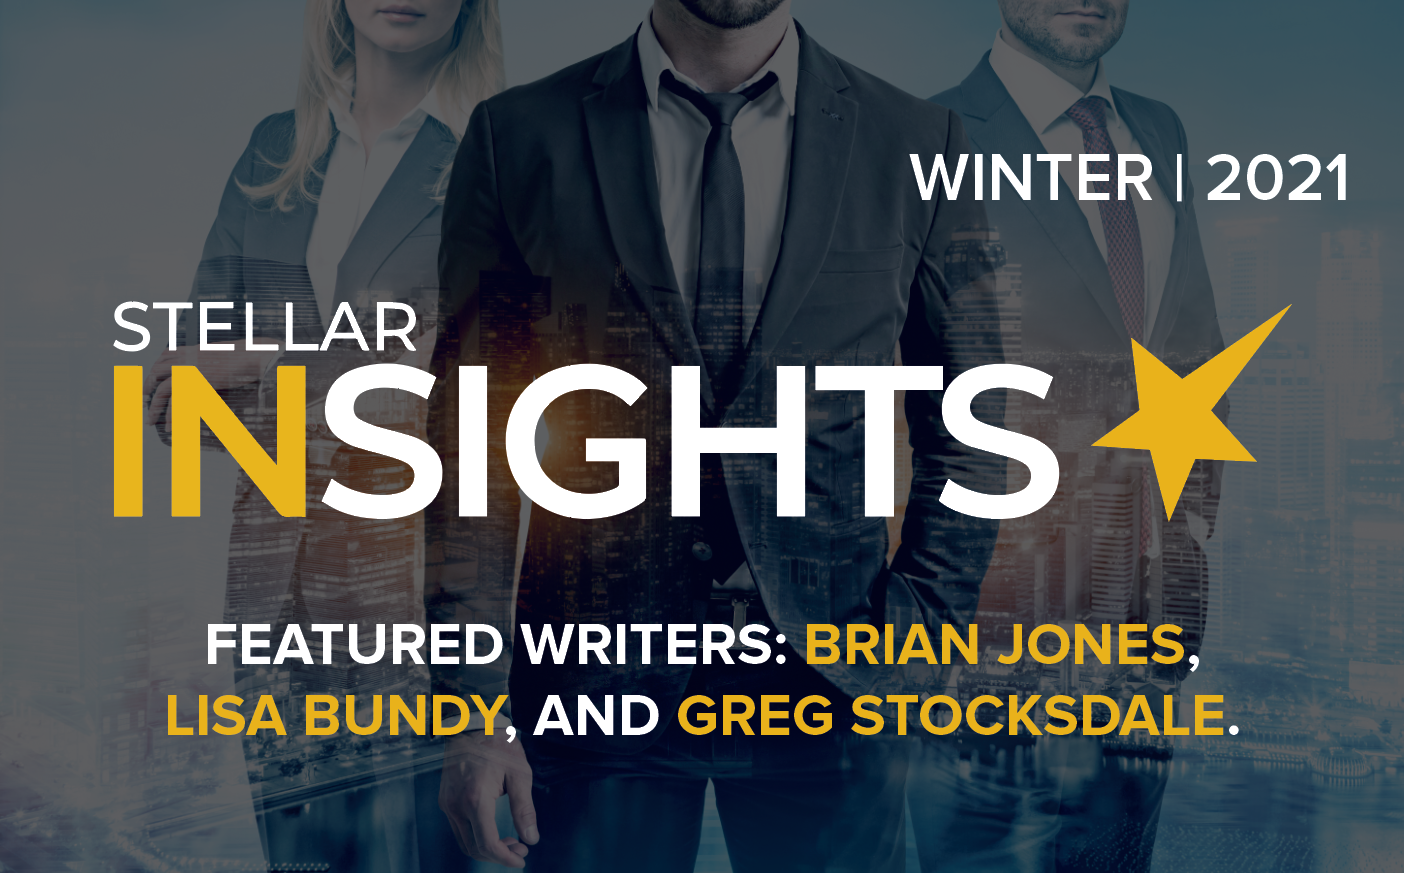 Winter 2021 Edition of Stellar Insights